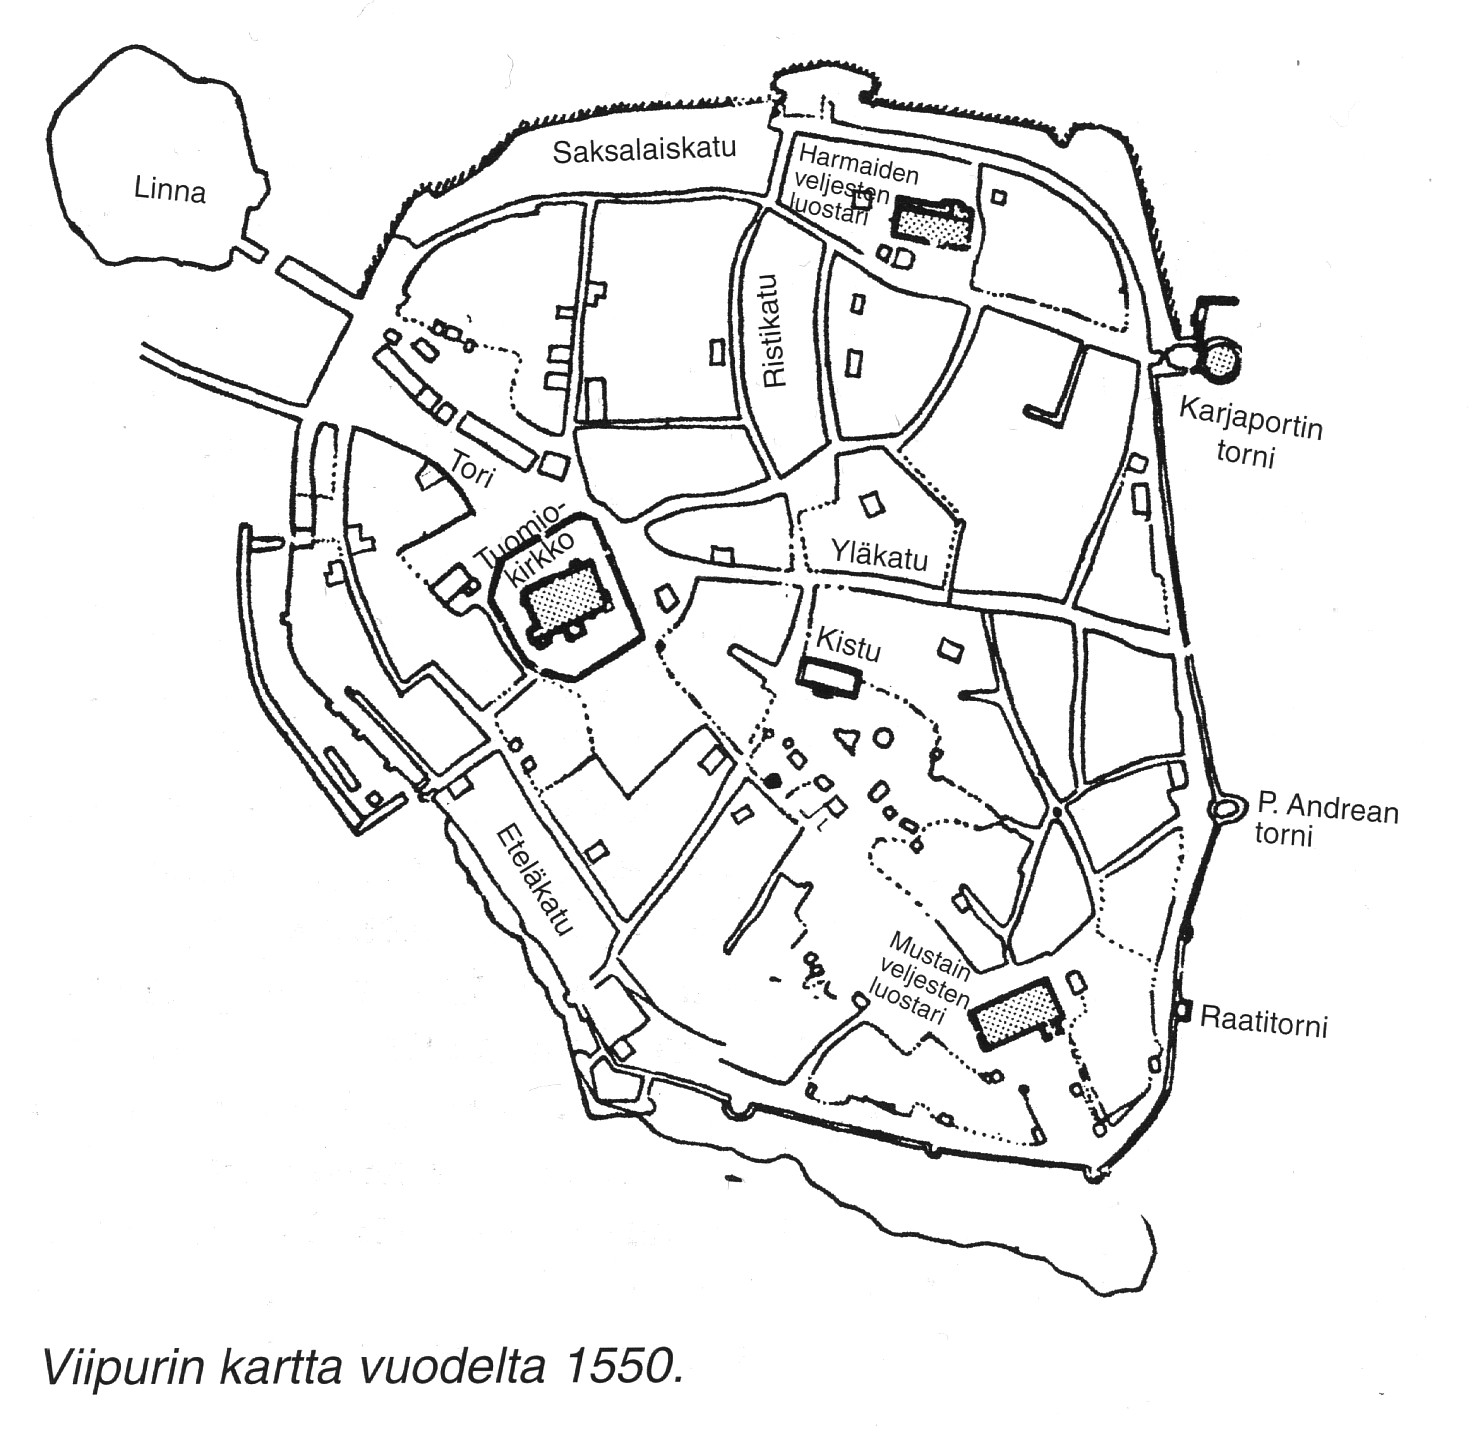 Map of Viipuri 1550